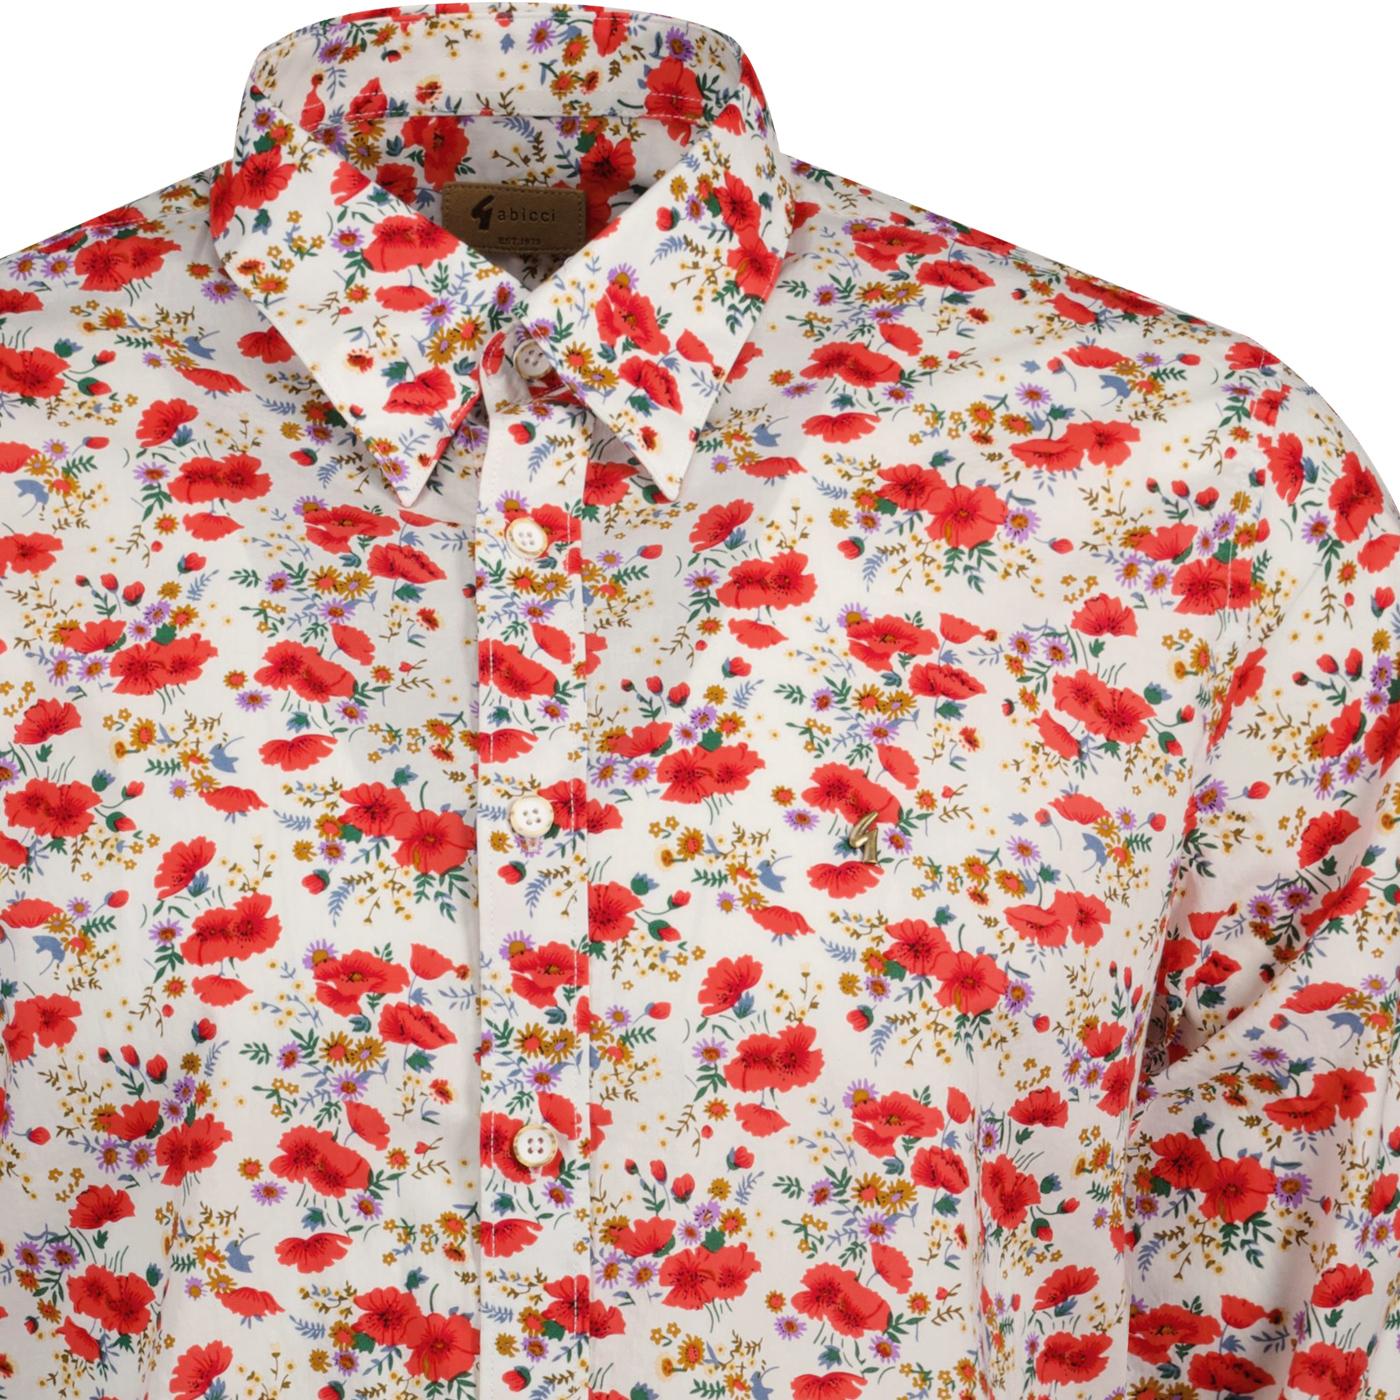 Gabicci Vintage Opium Poppy Print Floral Shirt in Cream